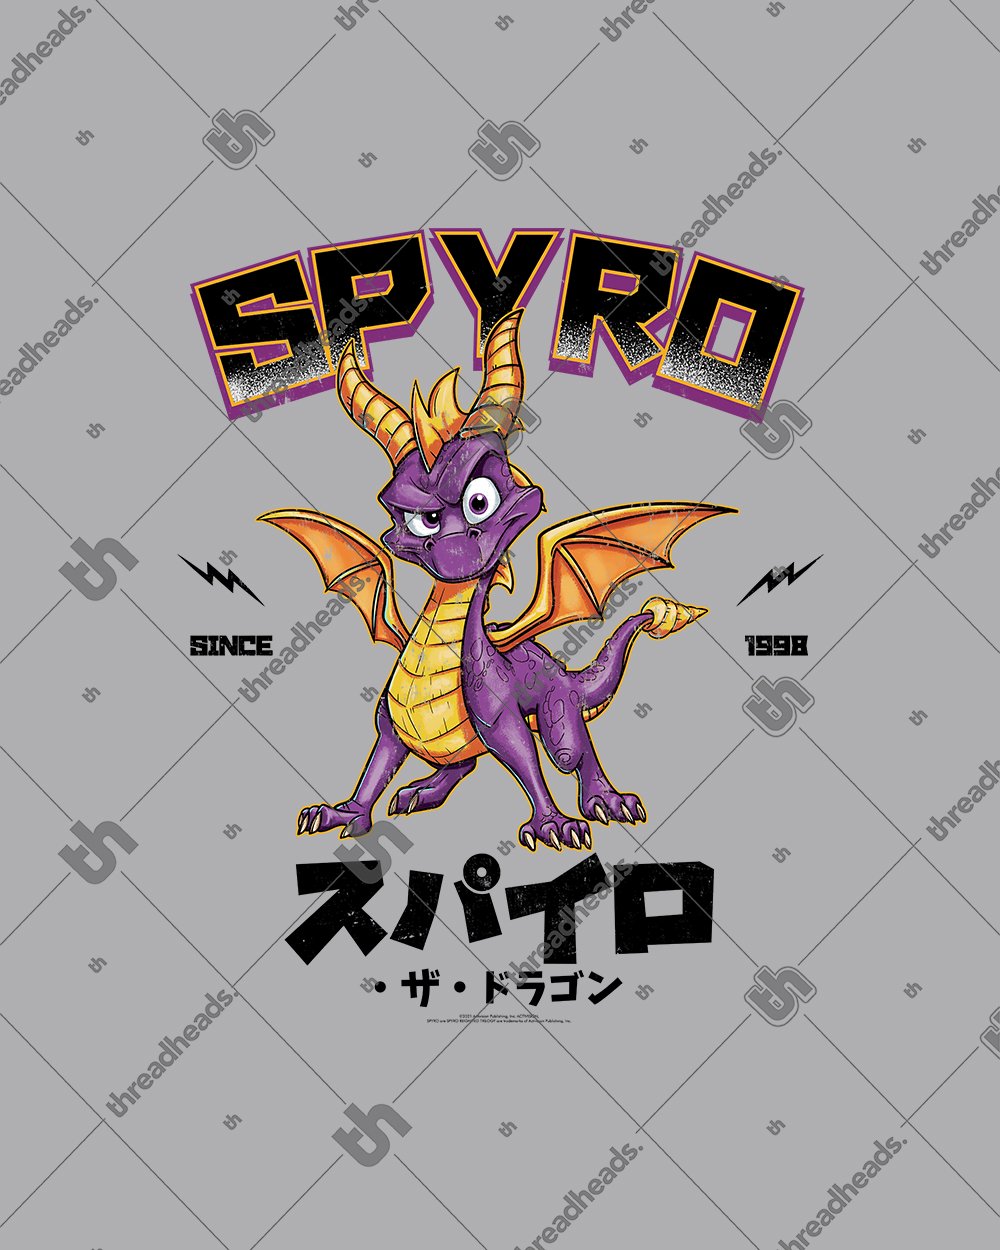 Spyro the Dragon JP Hoodie Australia Online #colour_grey